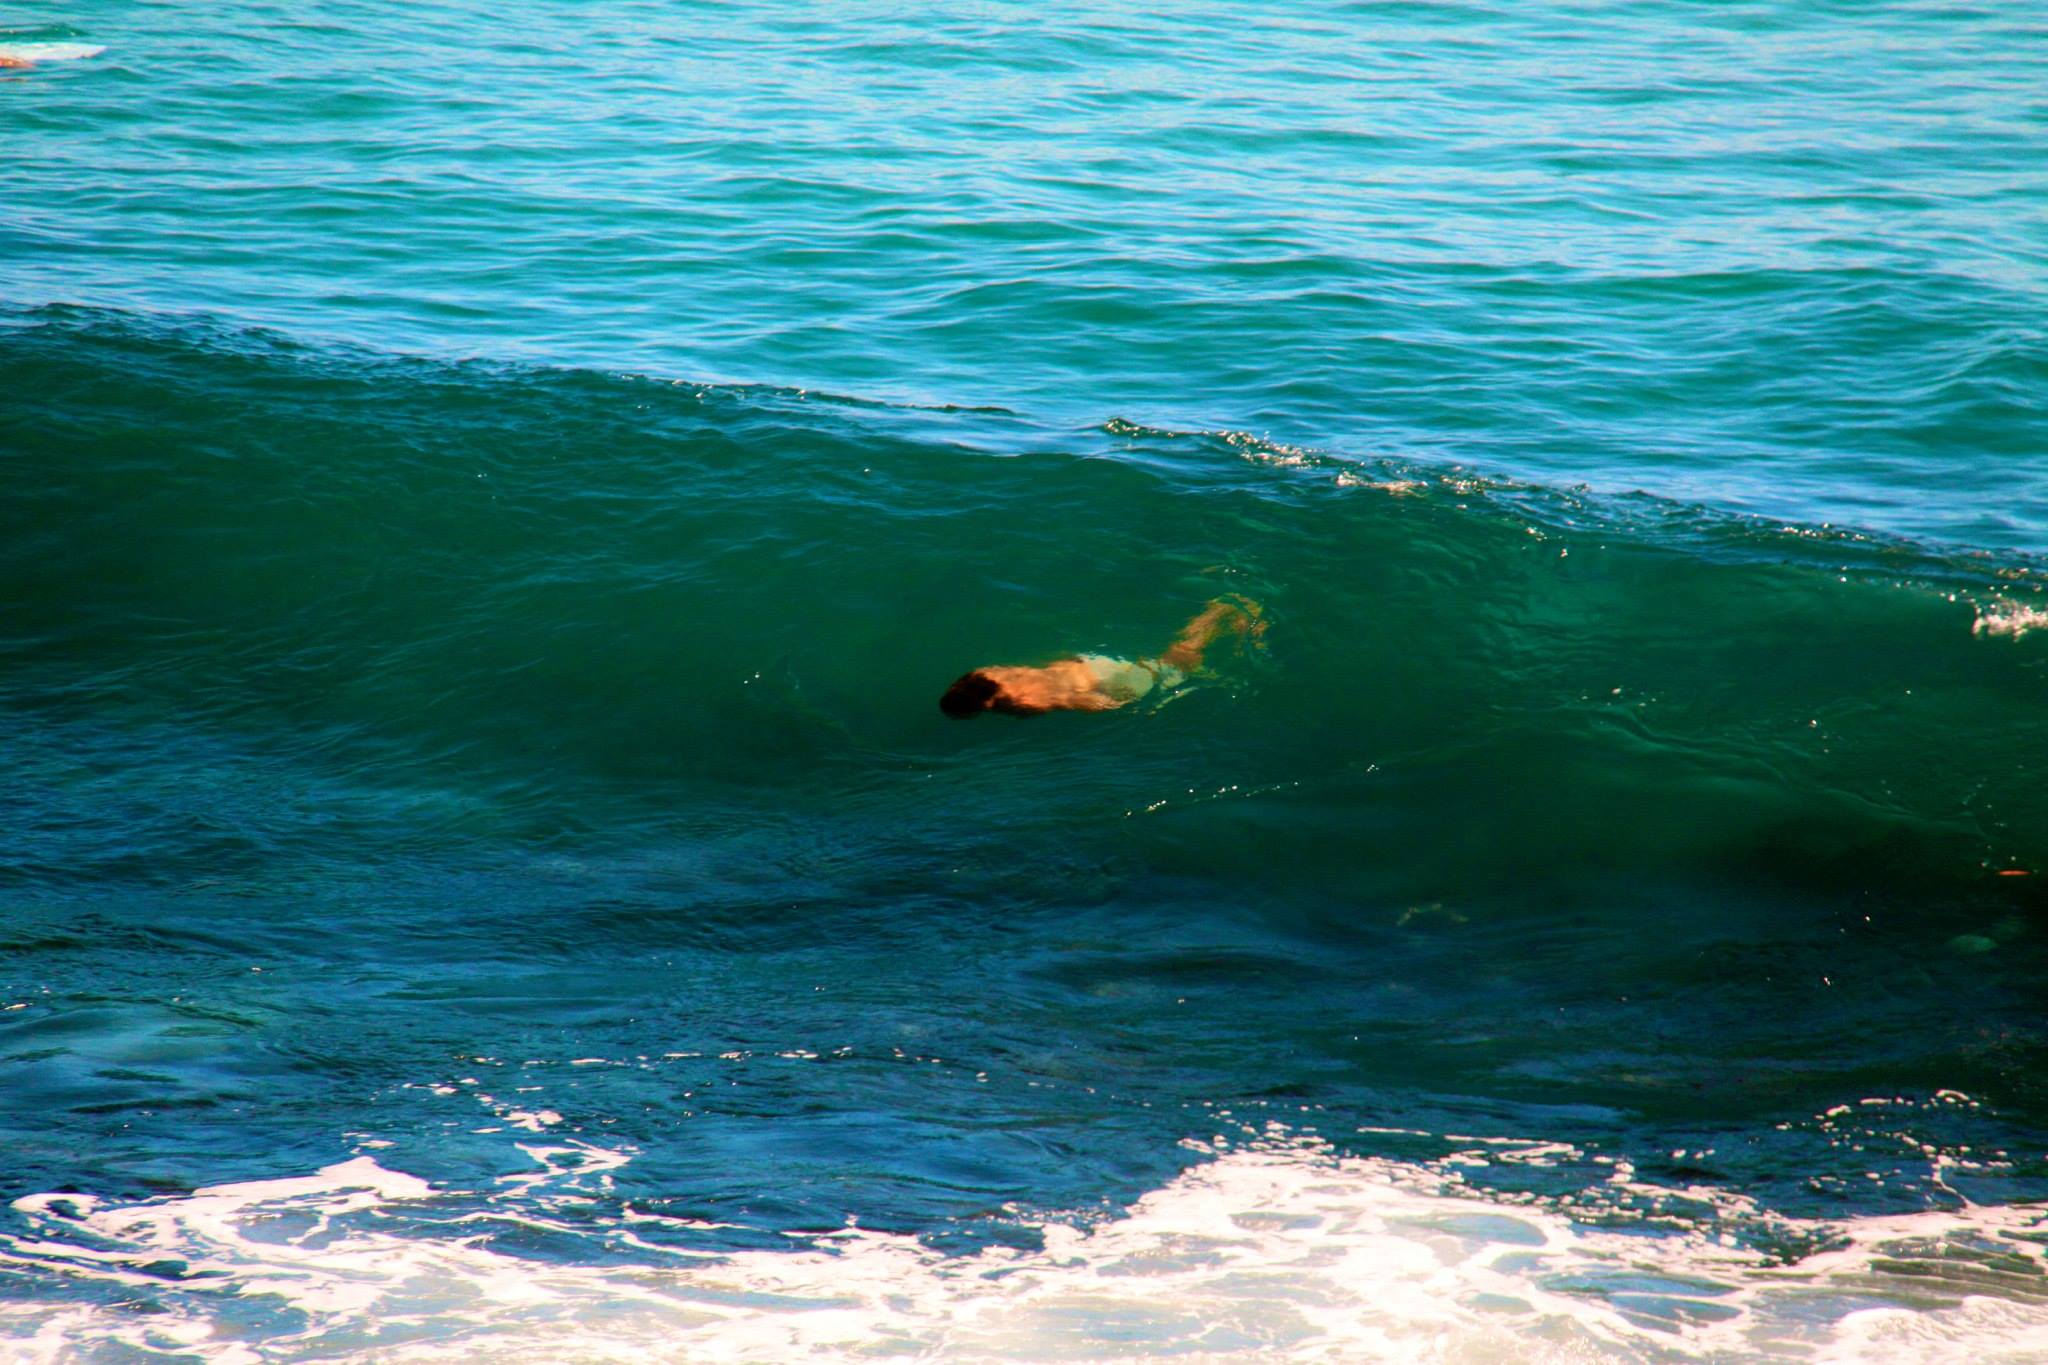 File:Bodysurfer under crystal clear water.jpg - Wikimedia Commons